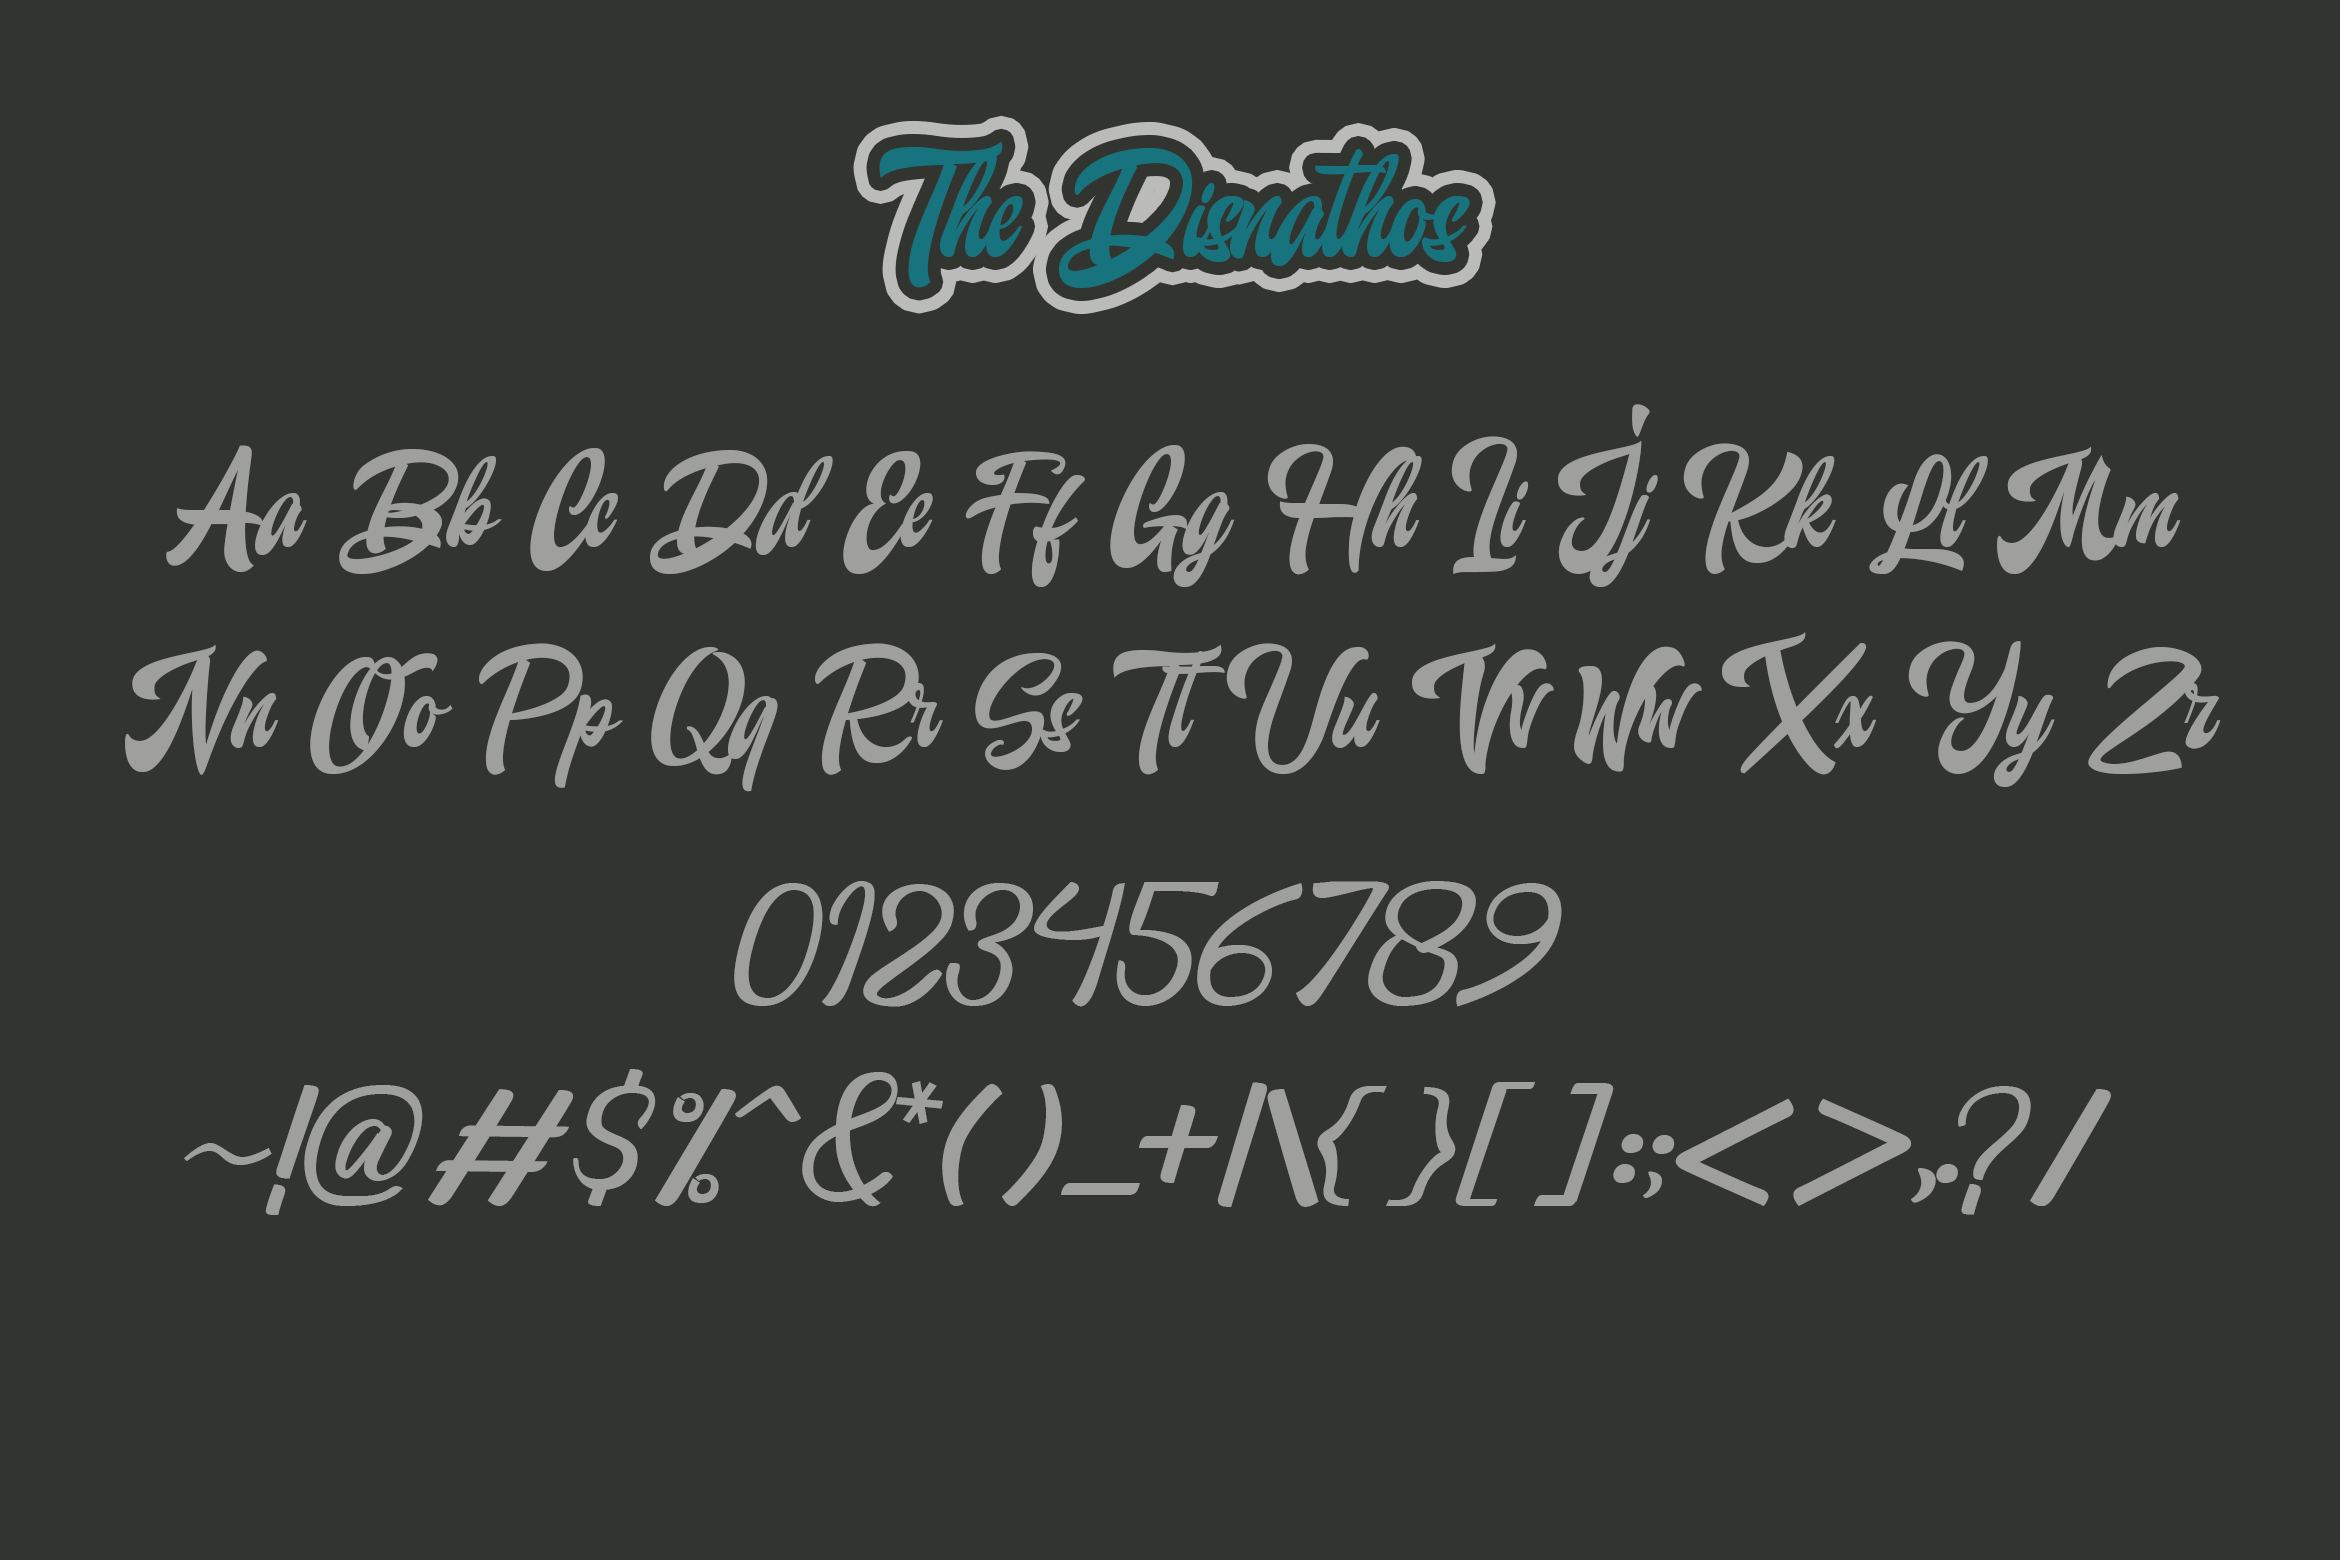 The Disnathos font